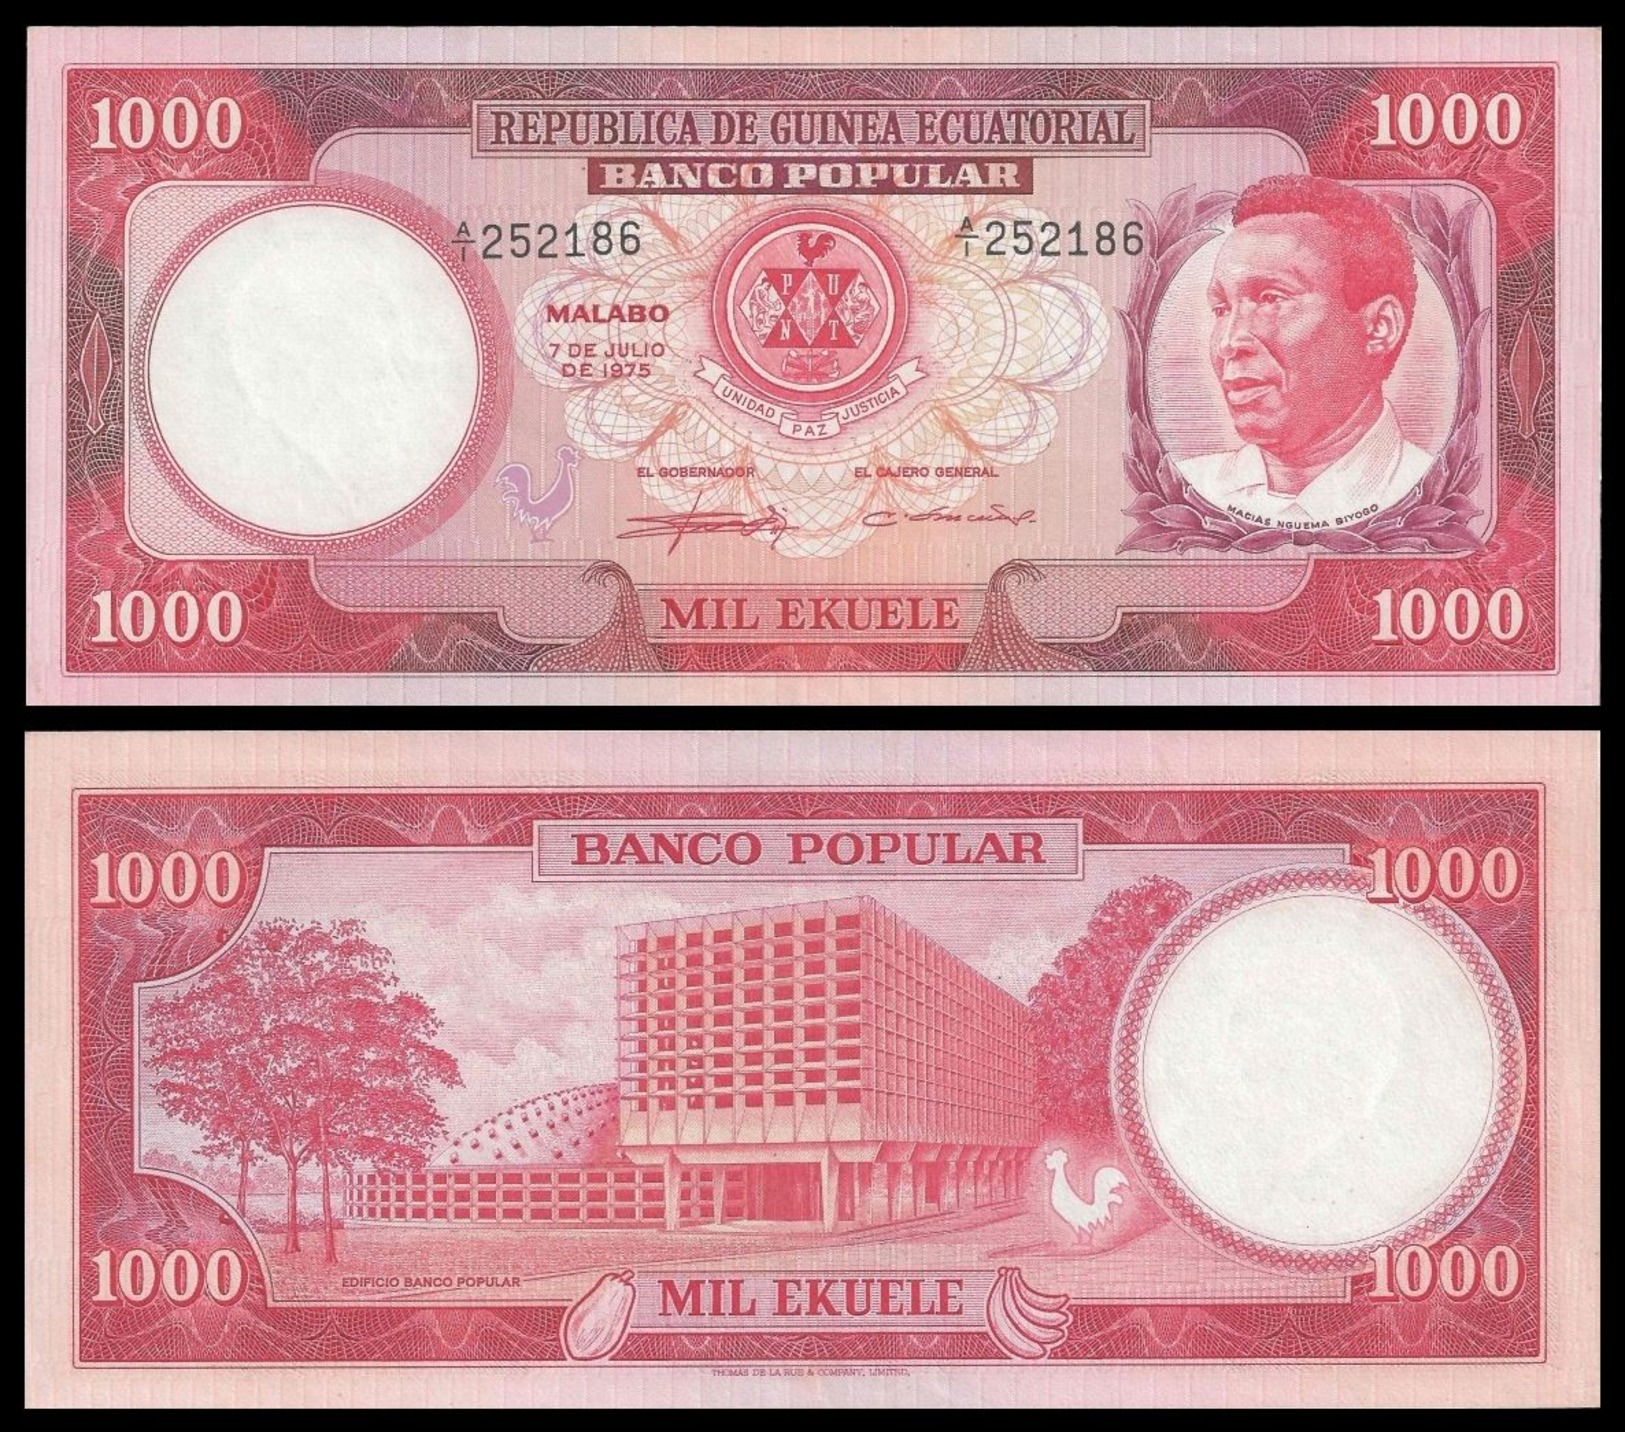 Equatorial Guinea 1000 BIPKWELE 1975 P 8 UNC - Guinea